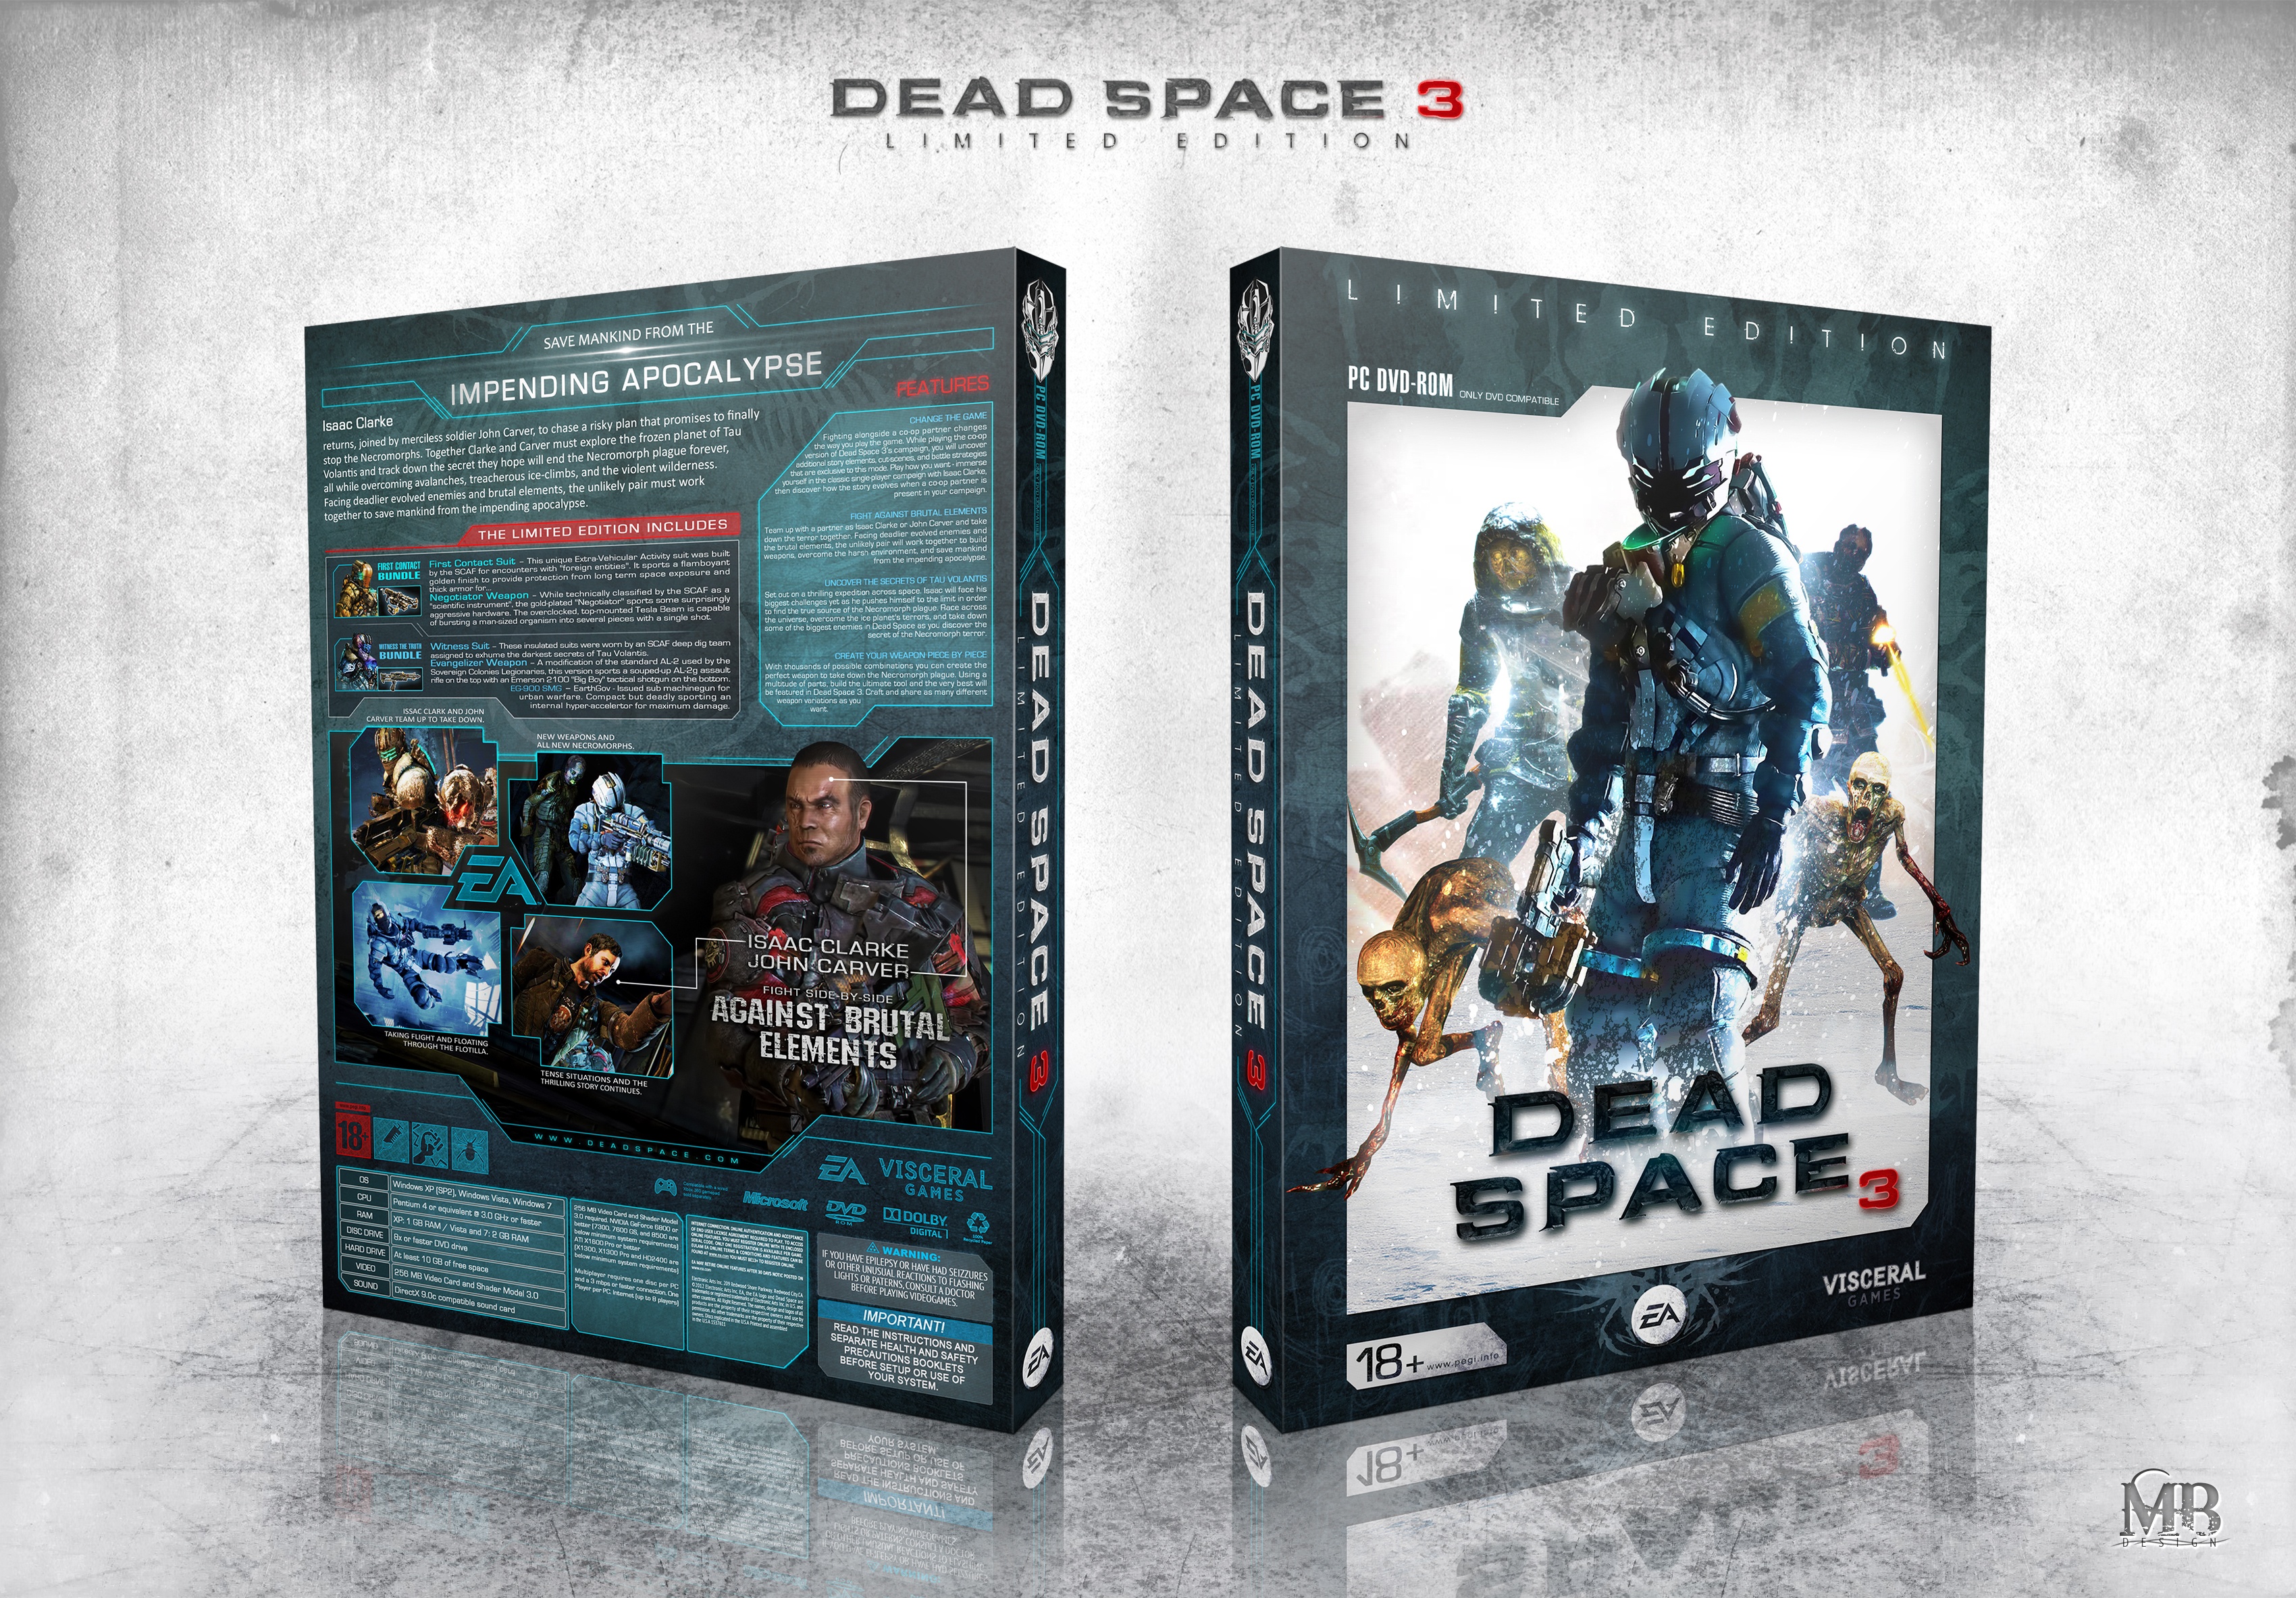 dead space 3 limited edition origin key